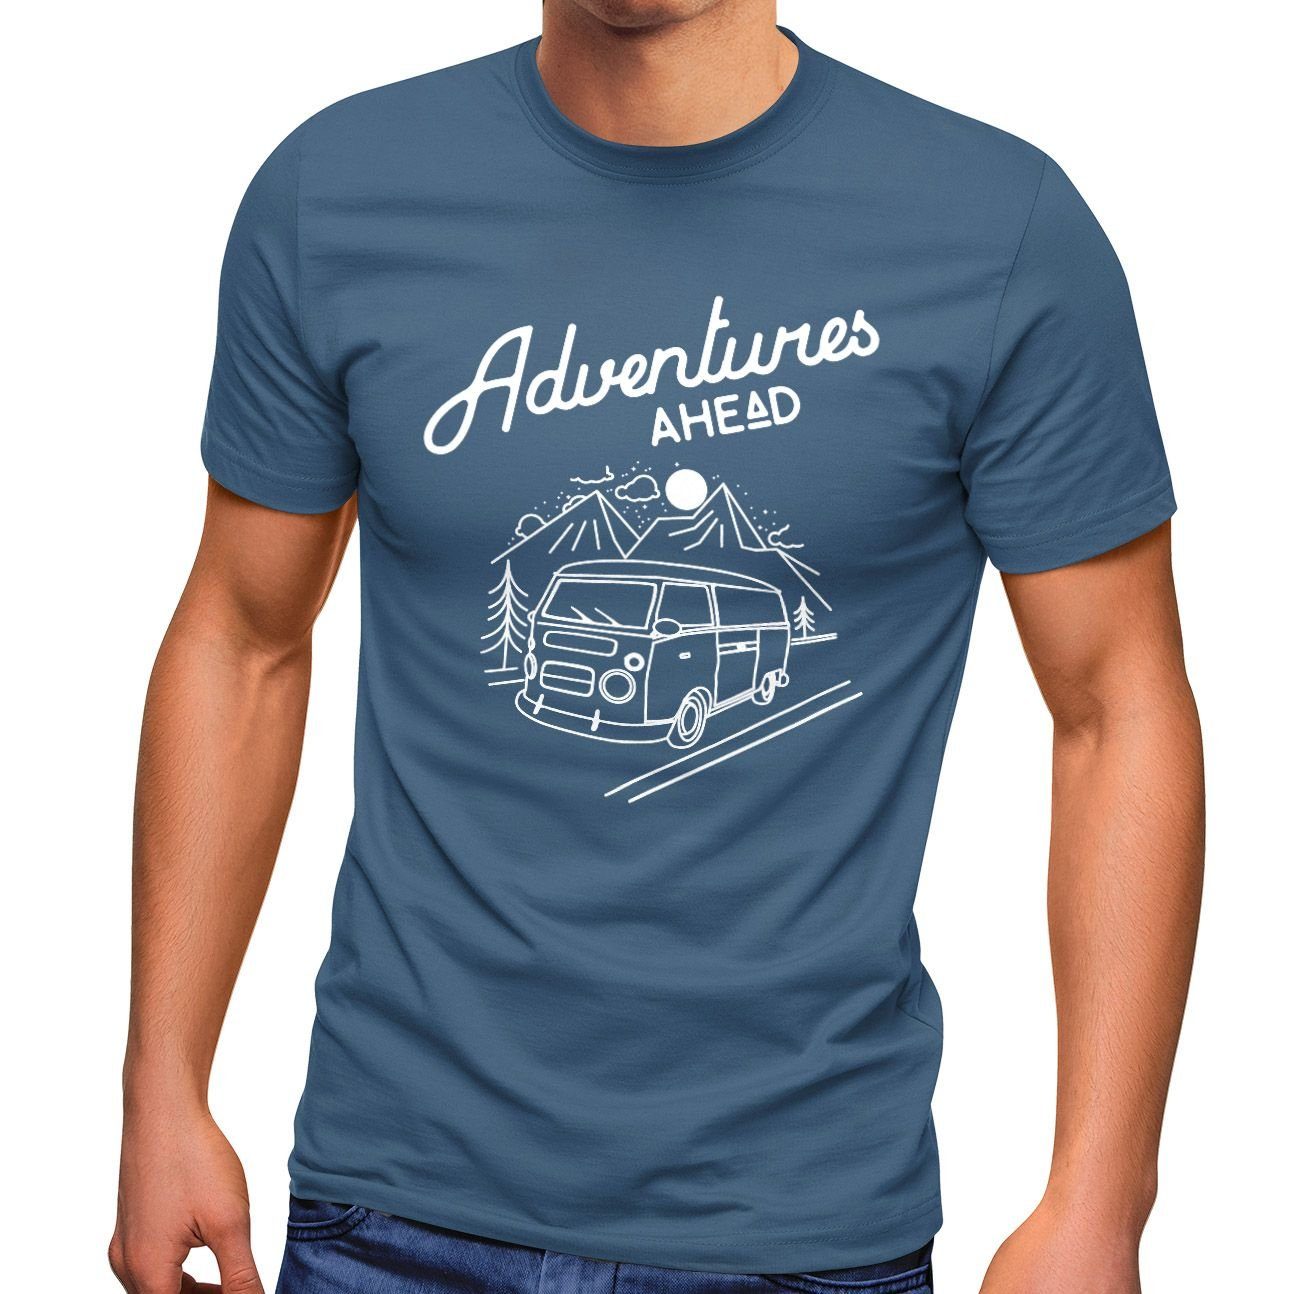 MoonWorks Print-Shirt Herren Retro Abenteuer T-Shirt mit Print Bus blau Moonworks® Adventures Ahead